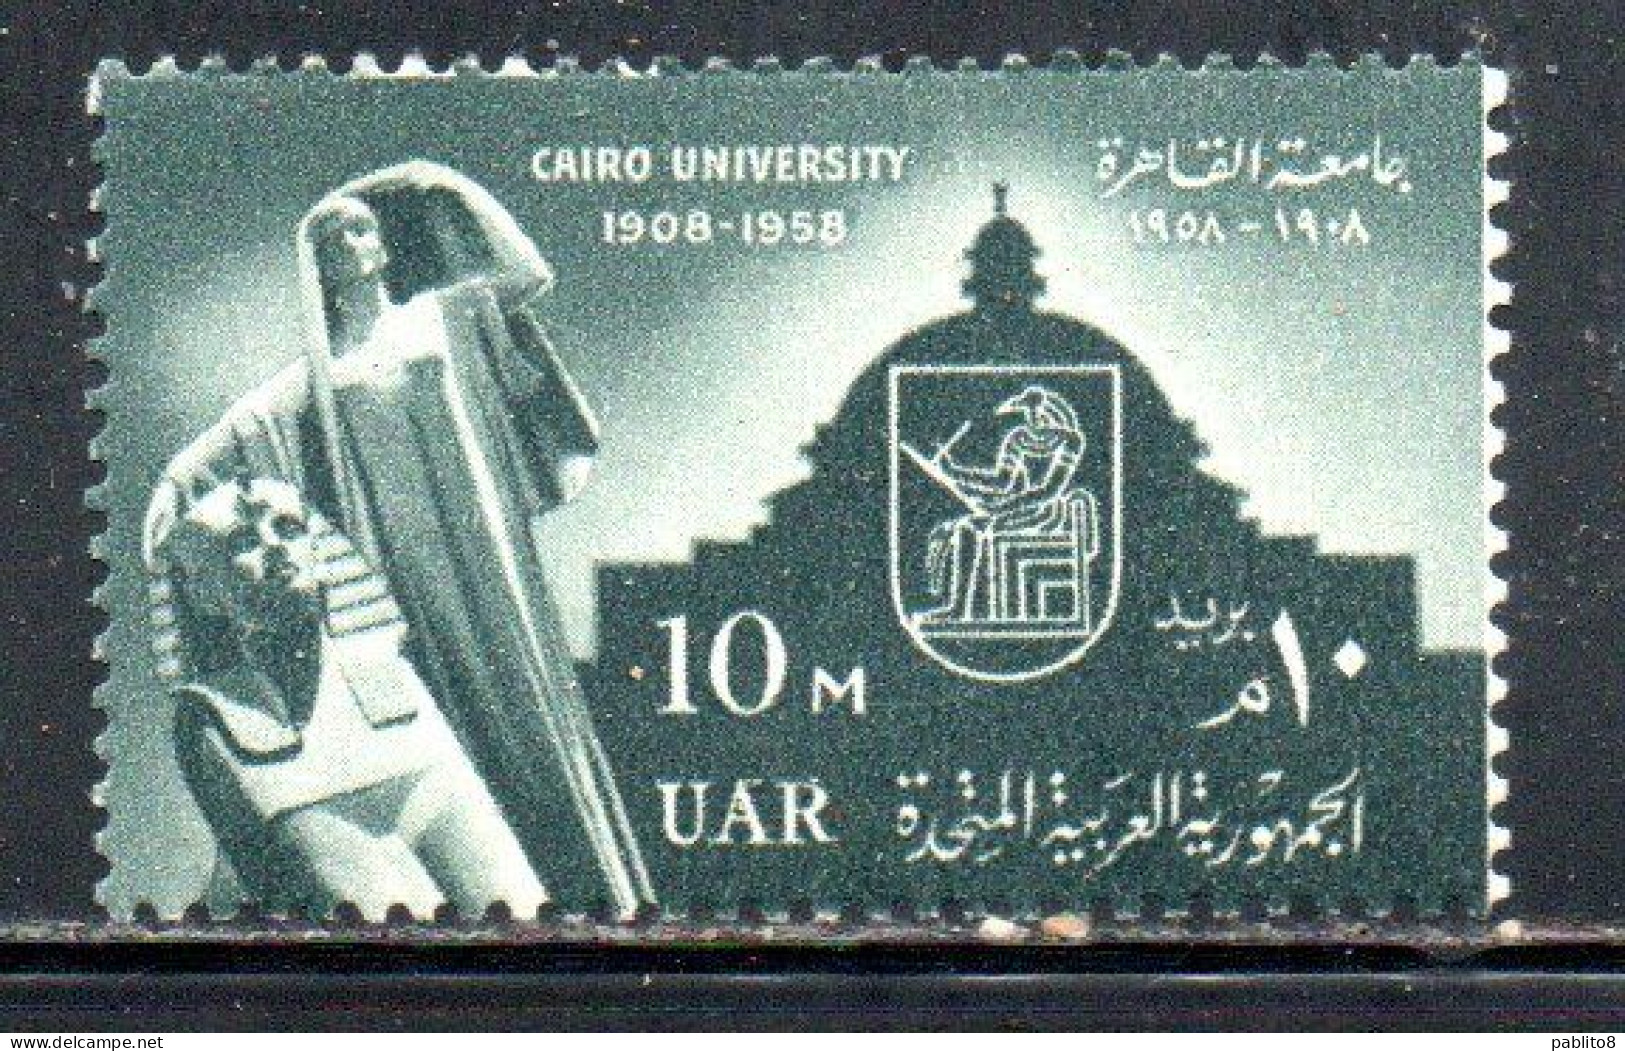 UAR EGYPT EGITTO 1958 50th ANNIVERSARY OF CAIRO UNIVERSITY 10m  MNH - Nuevos